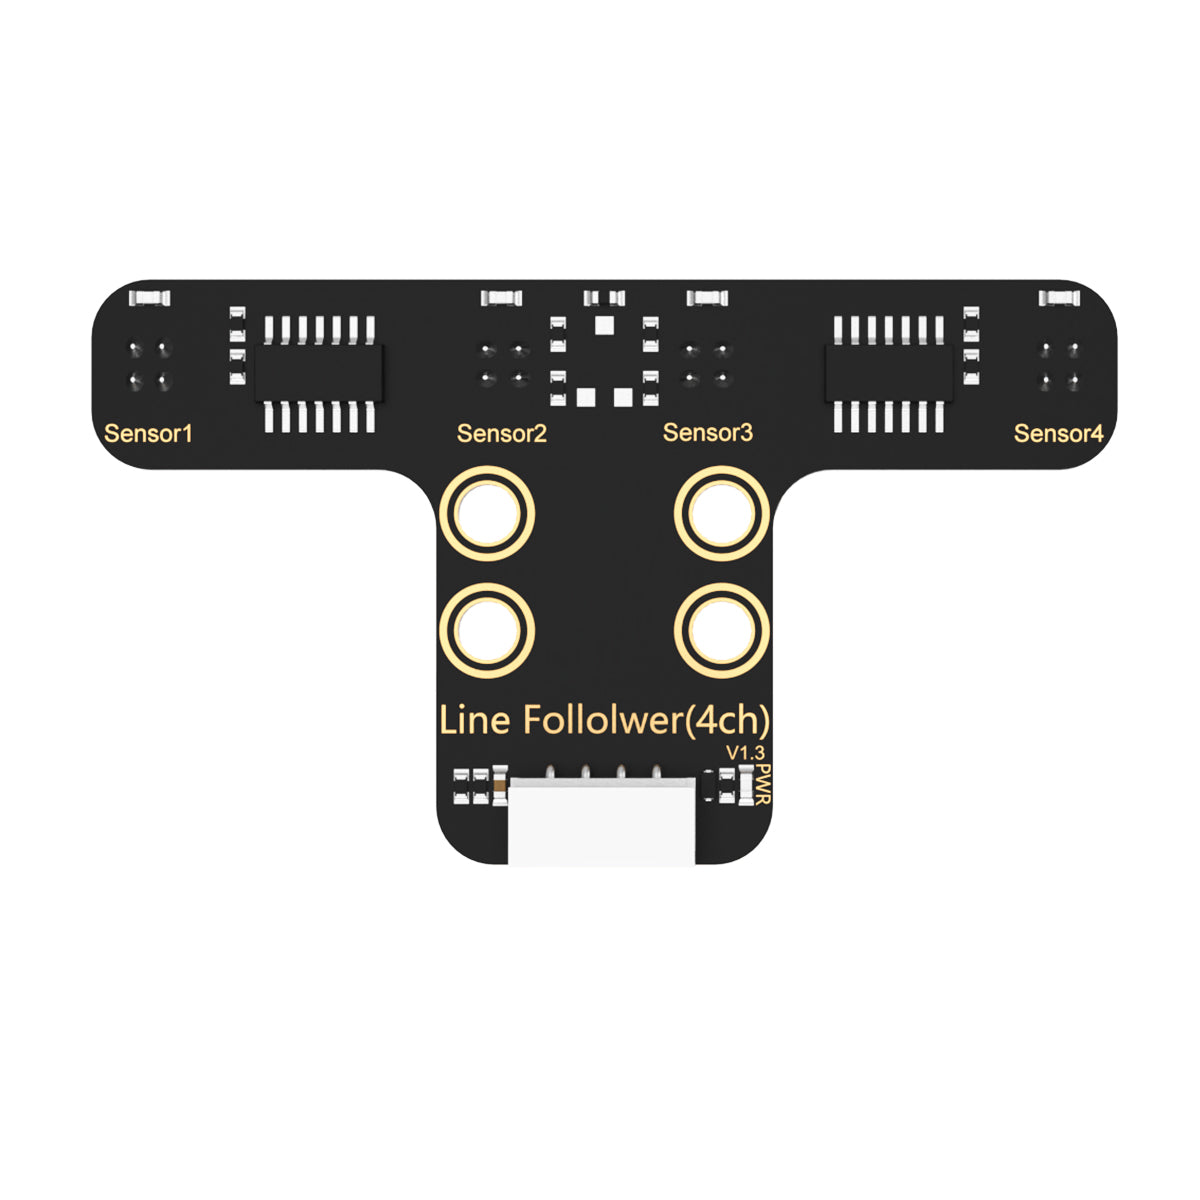 4-ch Line Follower: Hiwonder Robot Sensor for IR Line Tracking